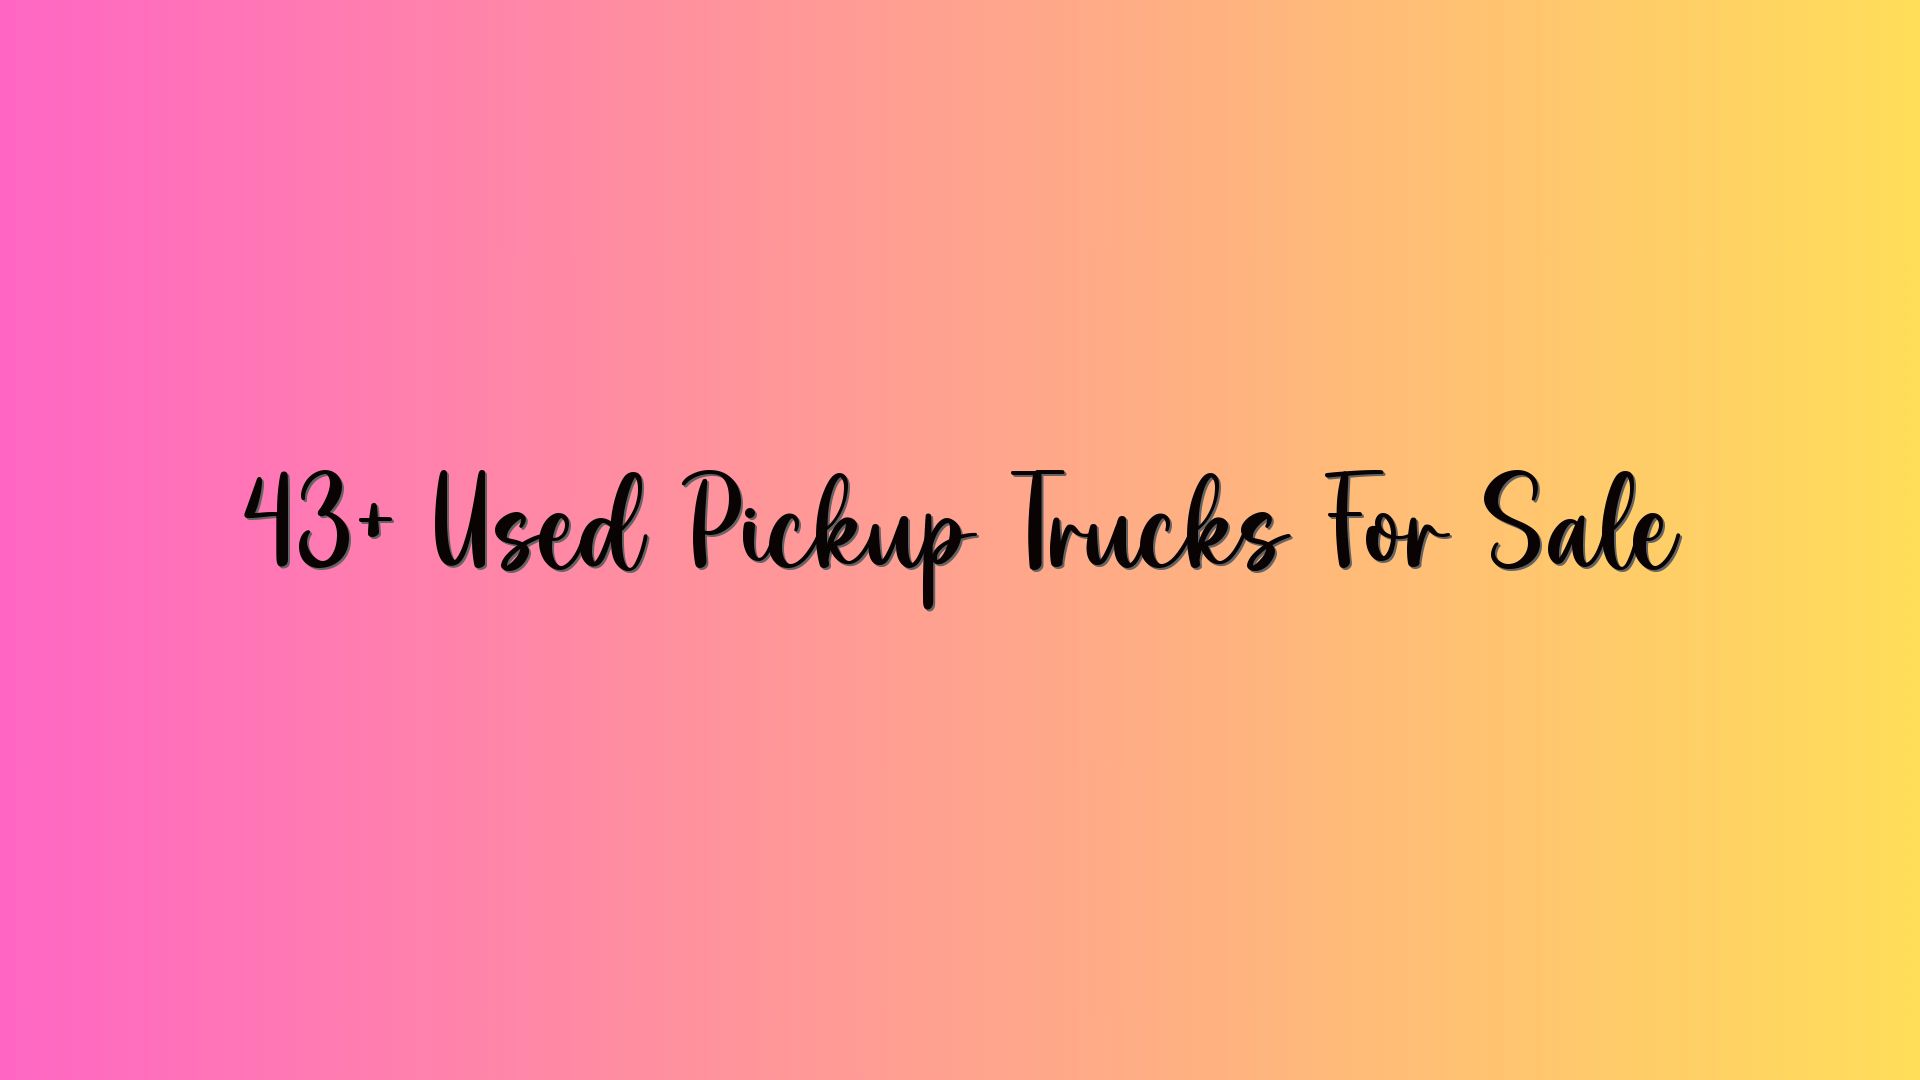 43+ Used Pickup Trucks For Sale